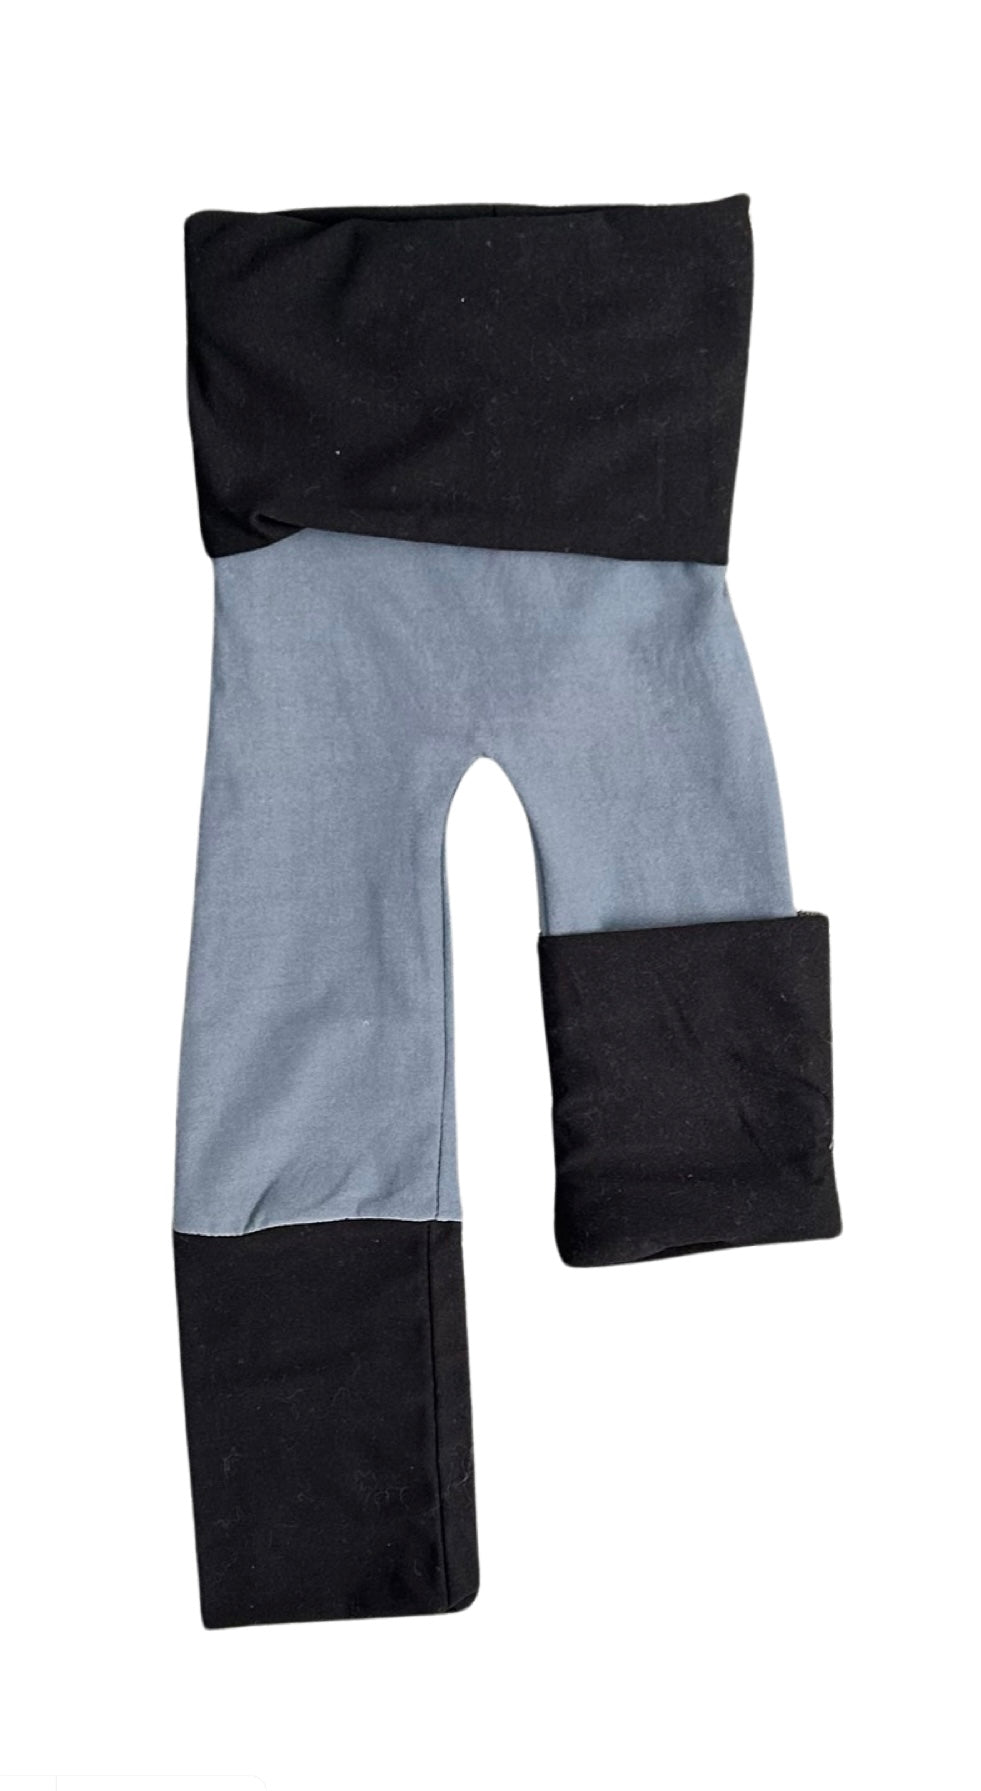 Adjustable Pants - Gray with Black